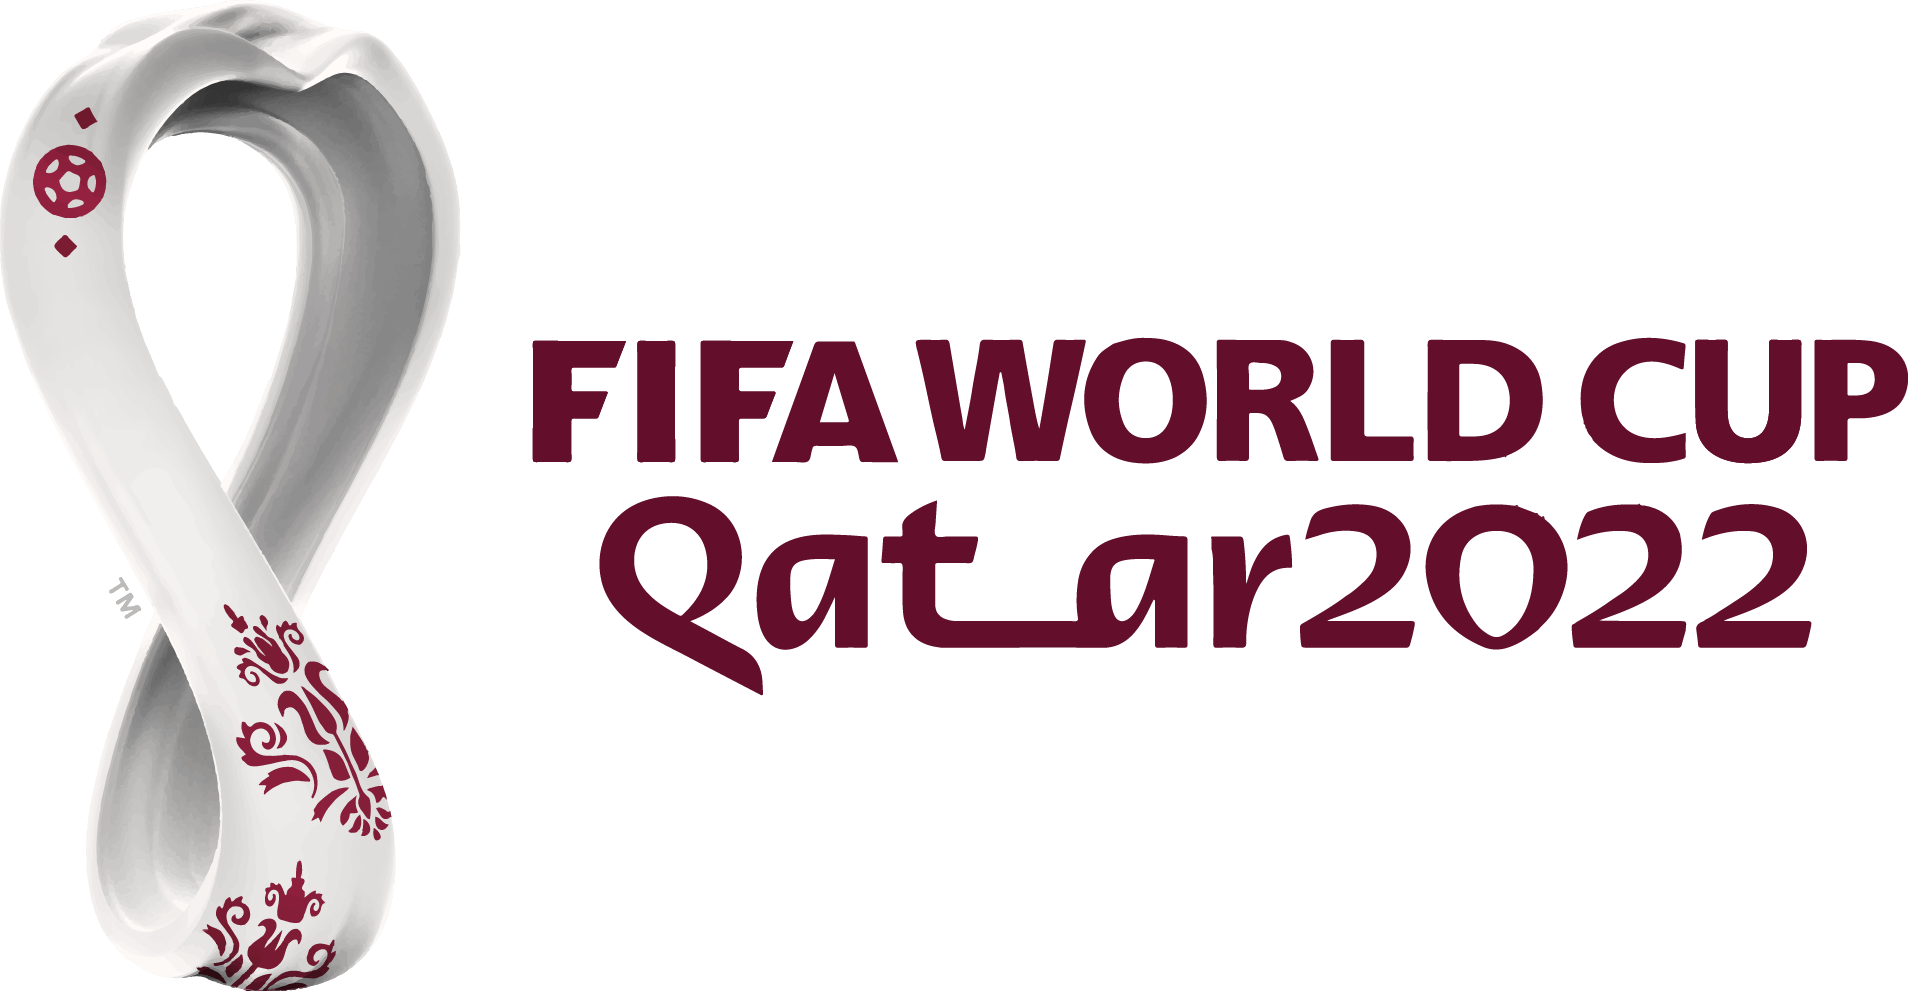 2022 fIfa world cup qatar transparent logo png #42094